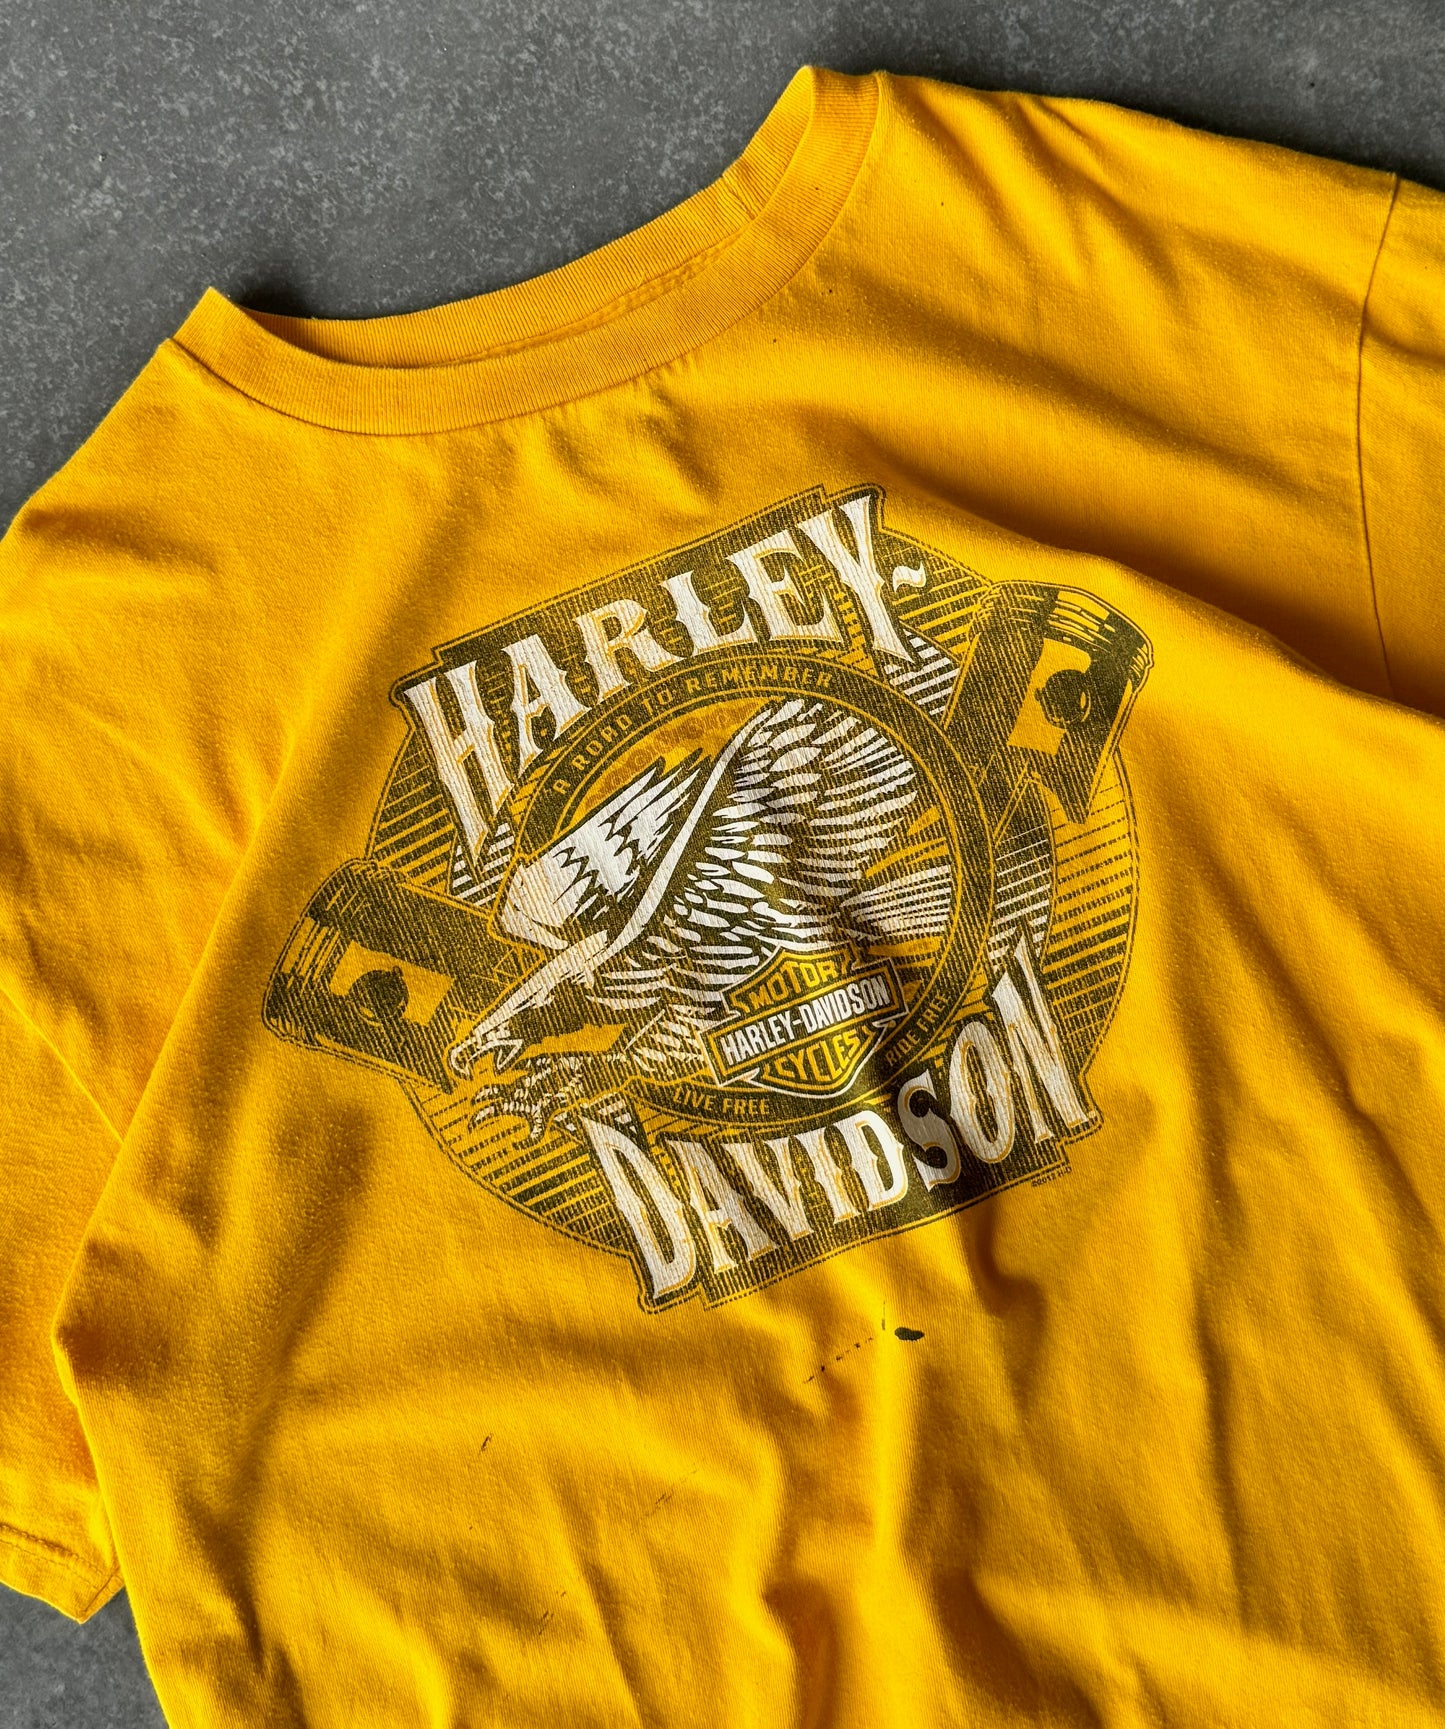 Vintage Harley Davidson Eagle Tee (XL)